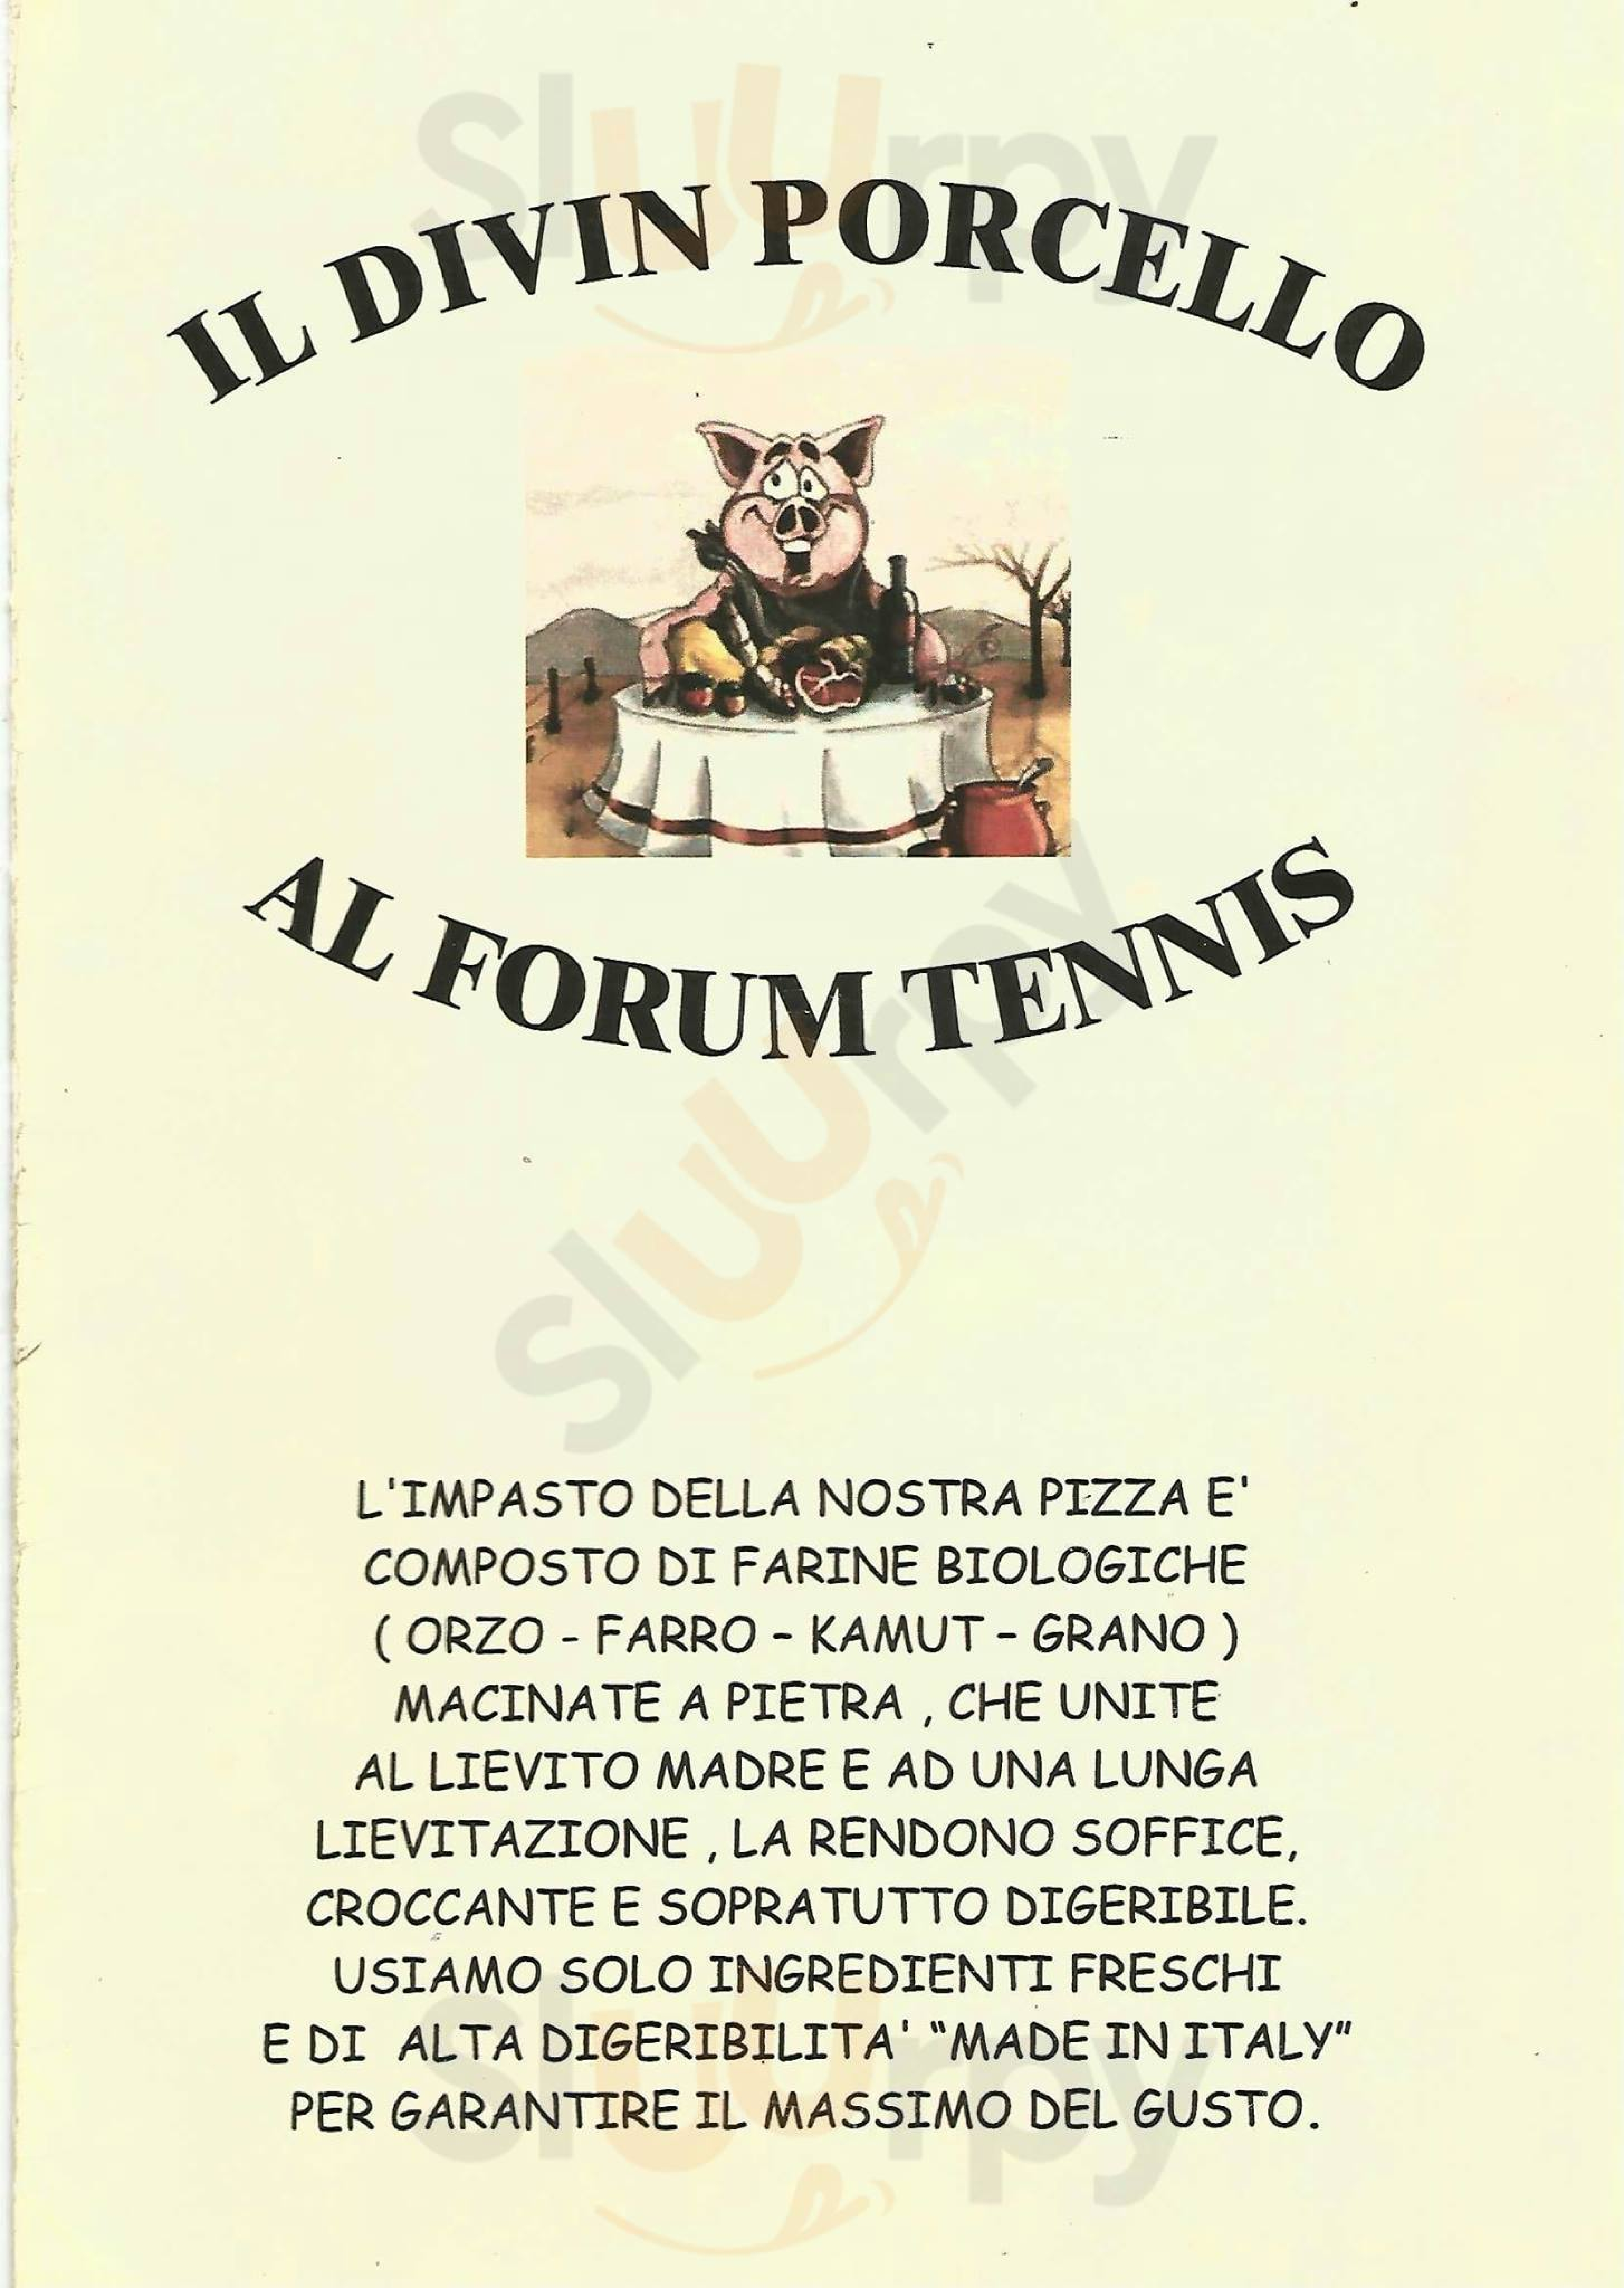 Forum Tennis Ristorante Pizzeria Forlì menù 1 pagina